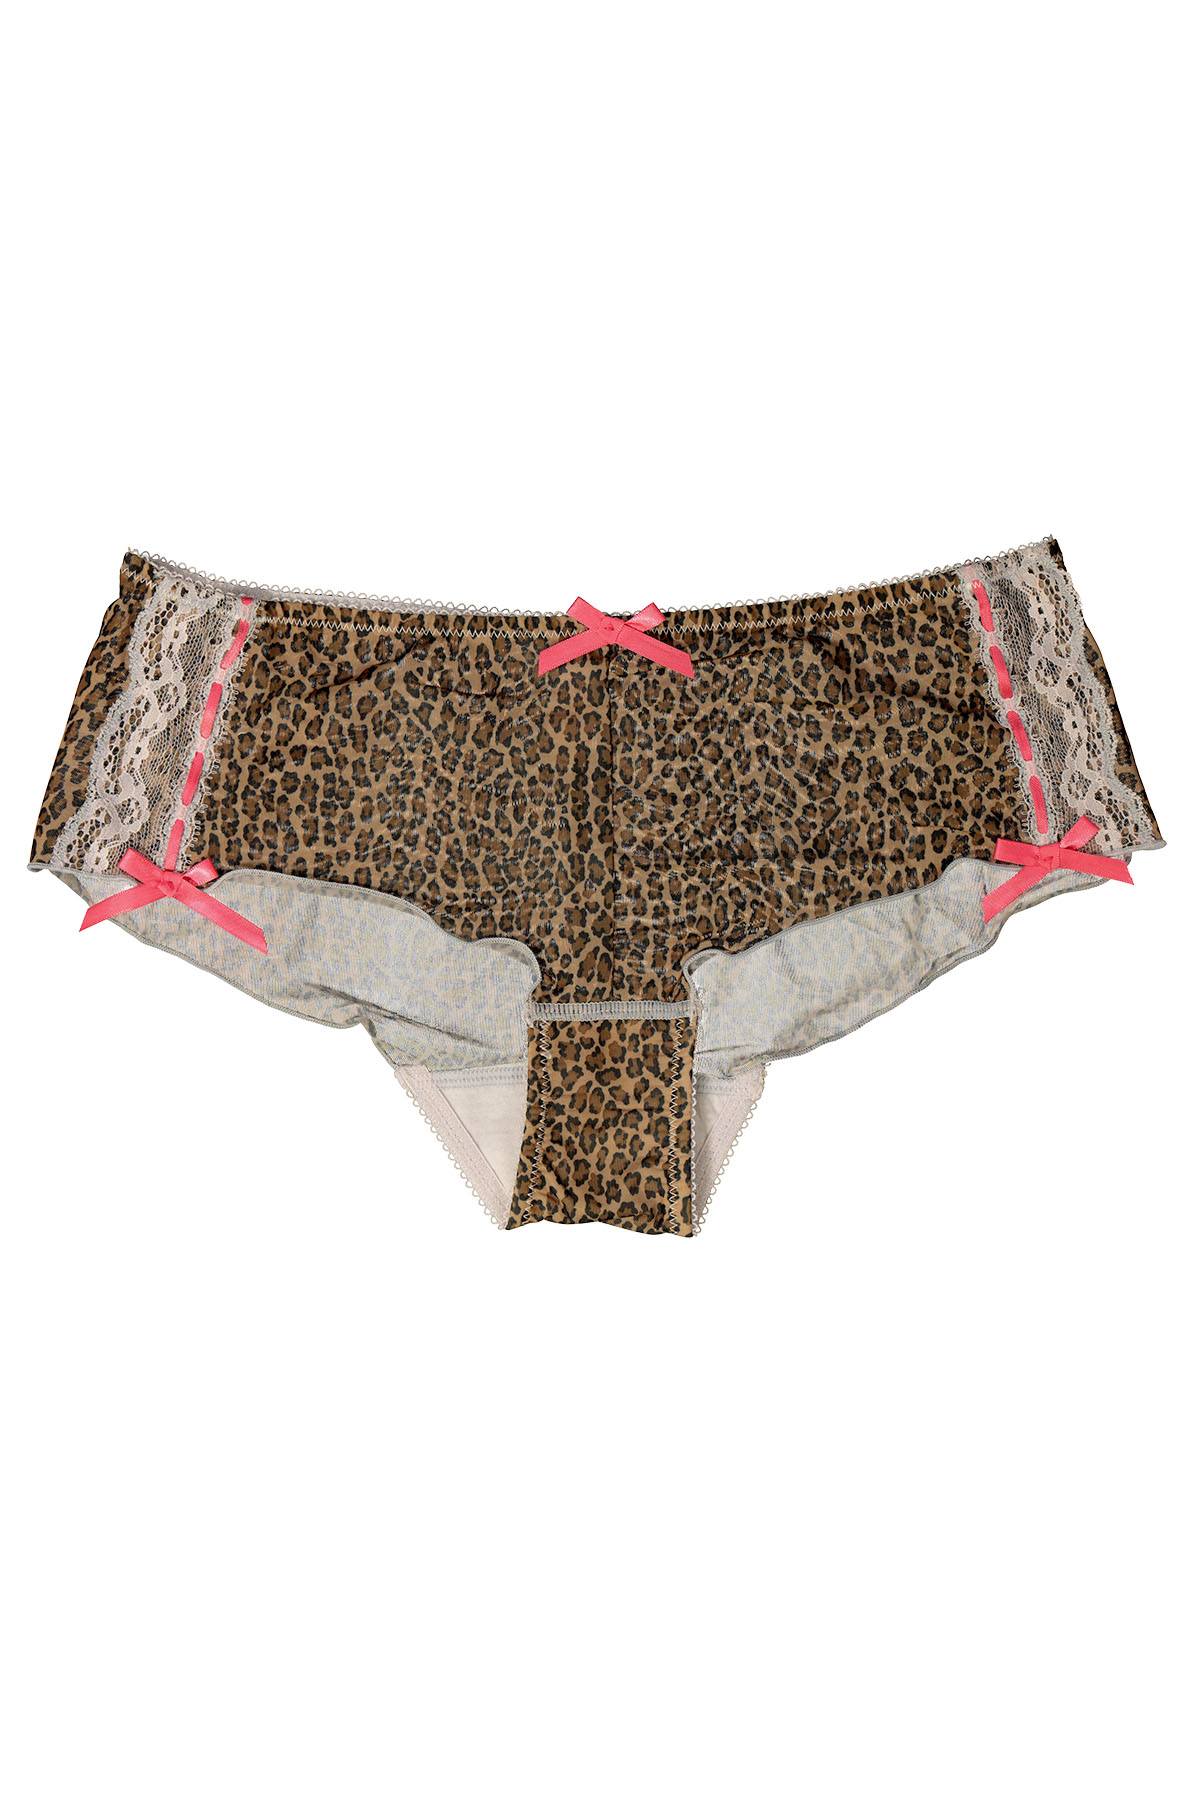 Affinitas Brown/Pink Leopard-Print Hipster Bootyshort